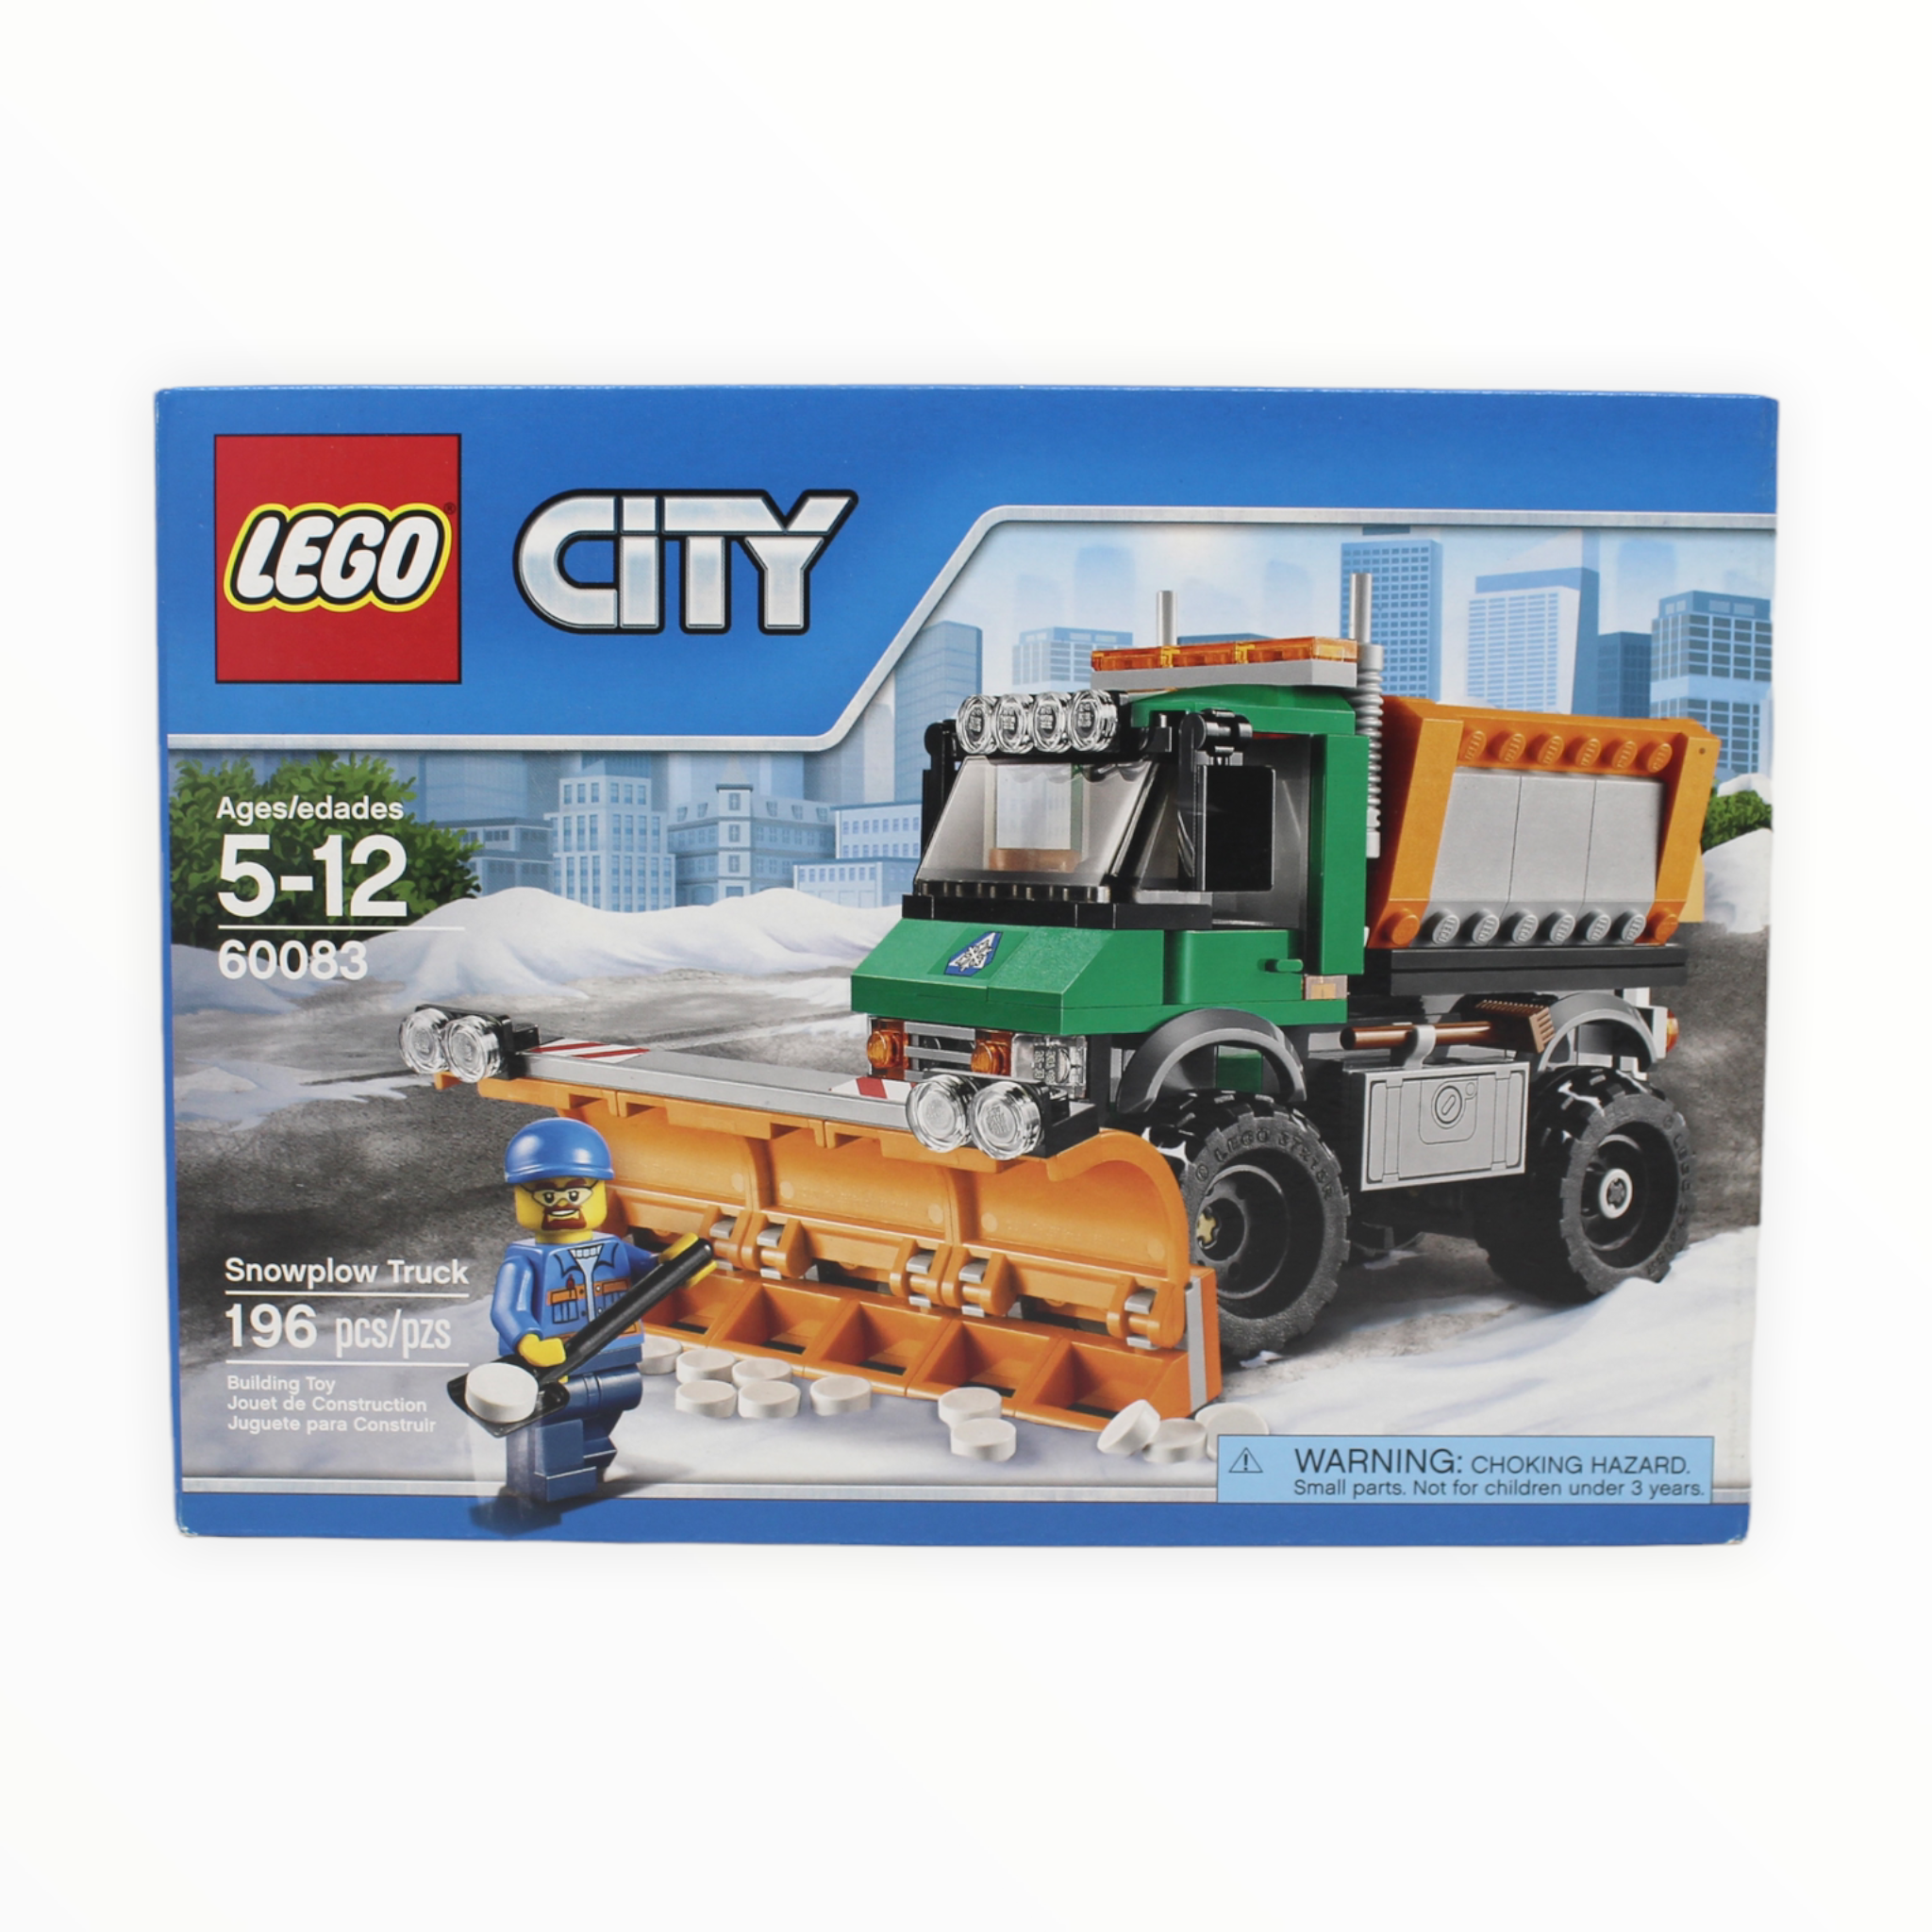 Retired Set 60083 City Snowplow Truck